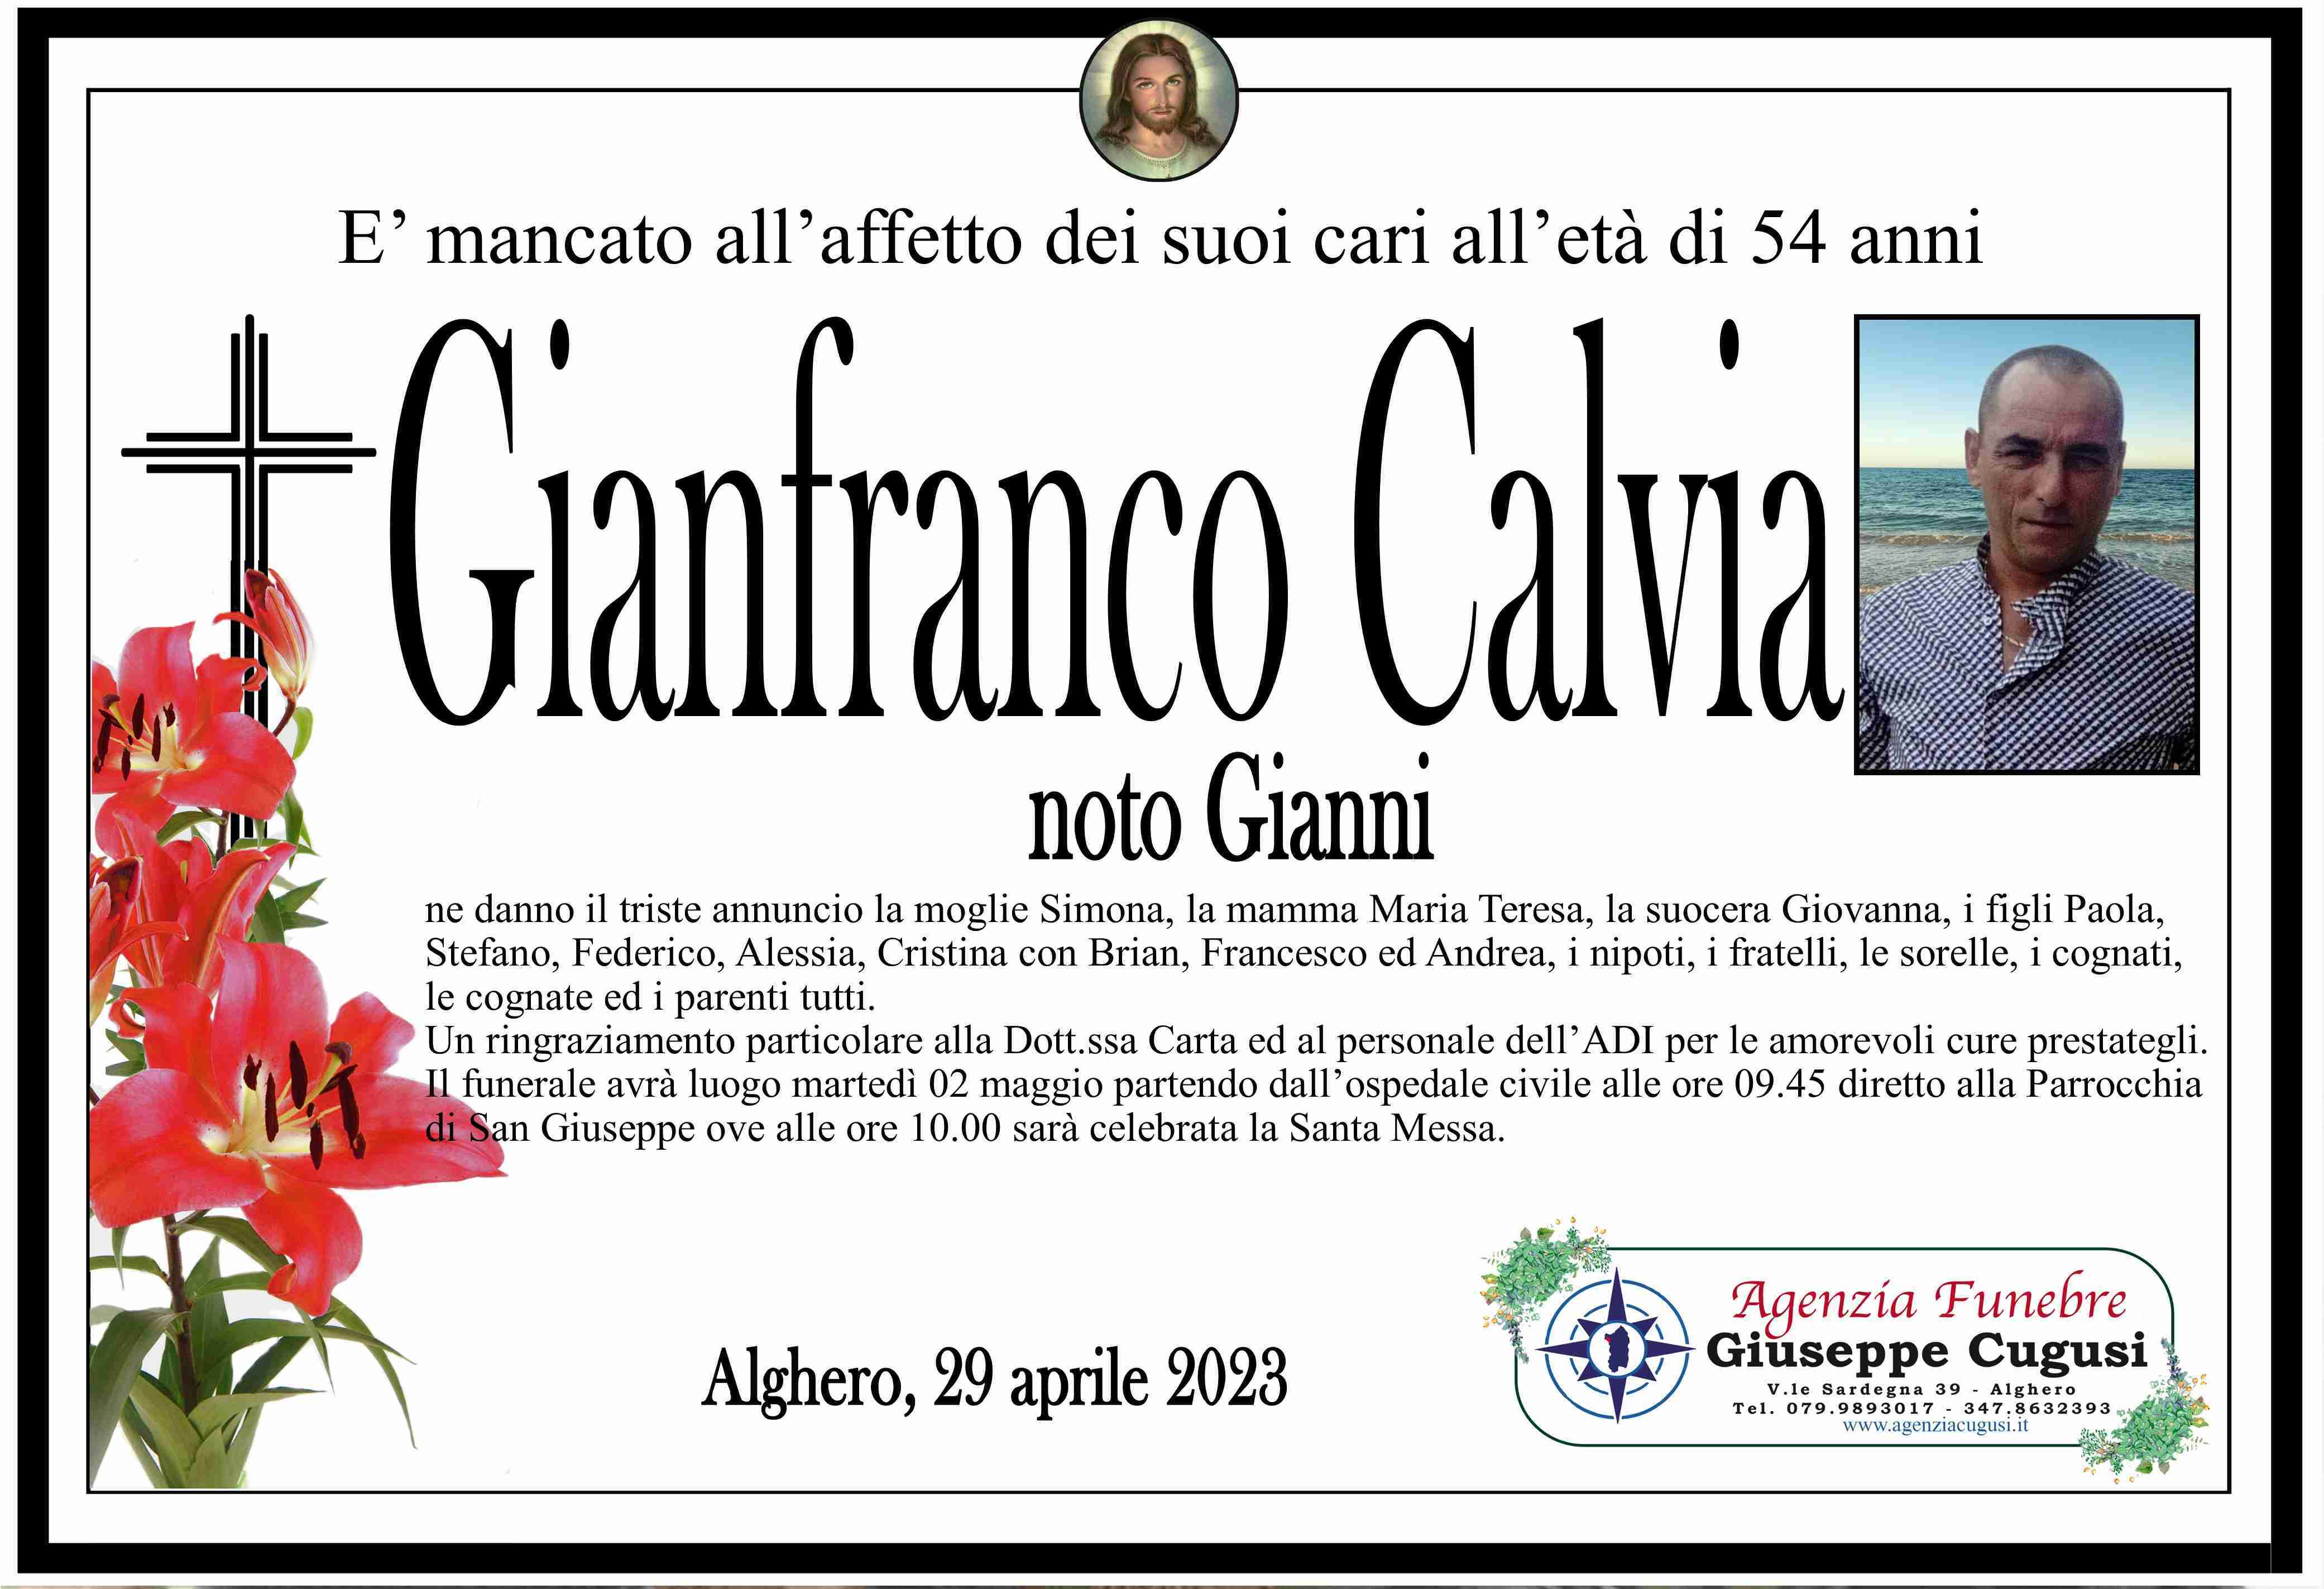 Gianfranco Calvia